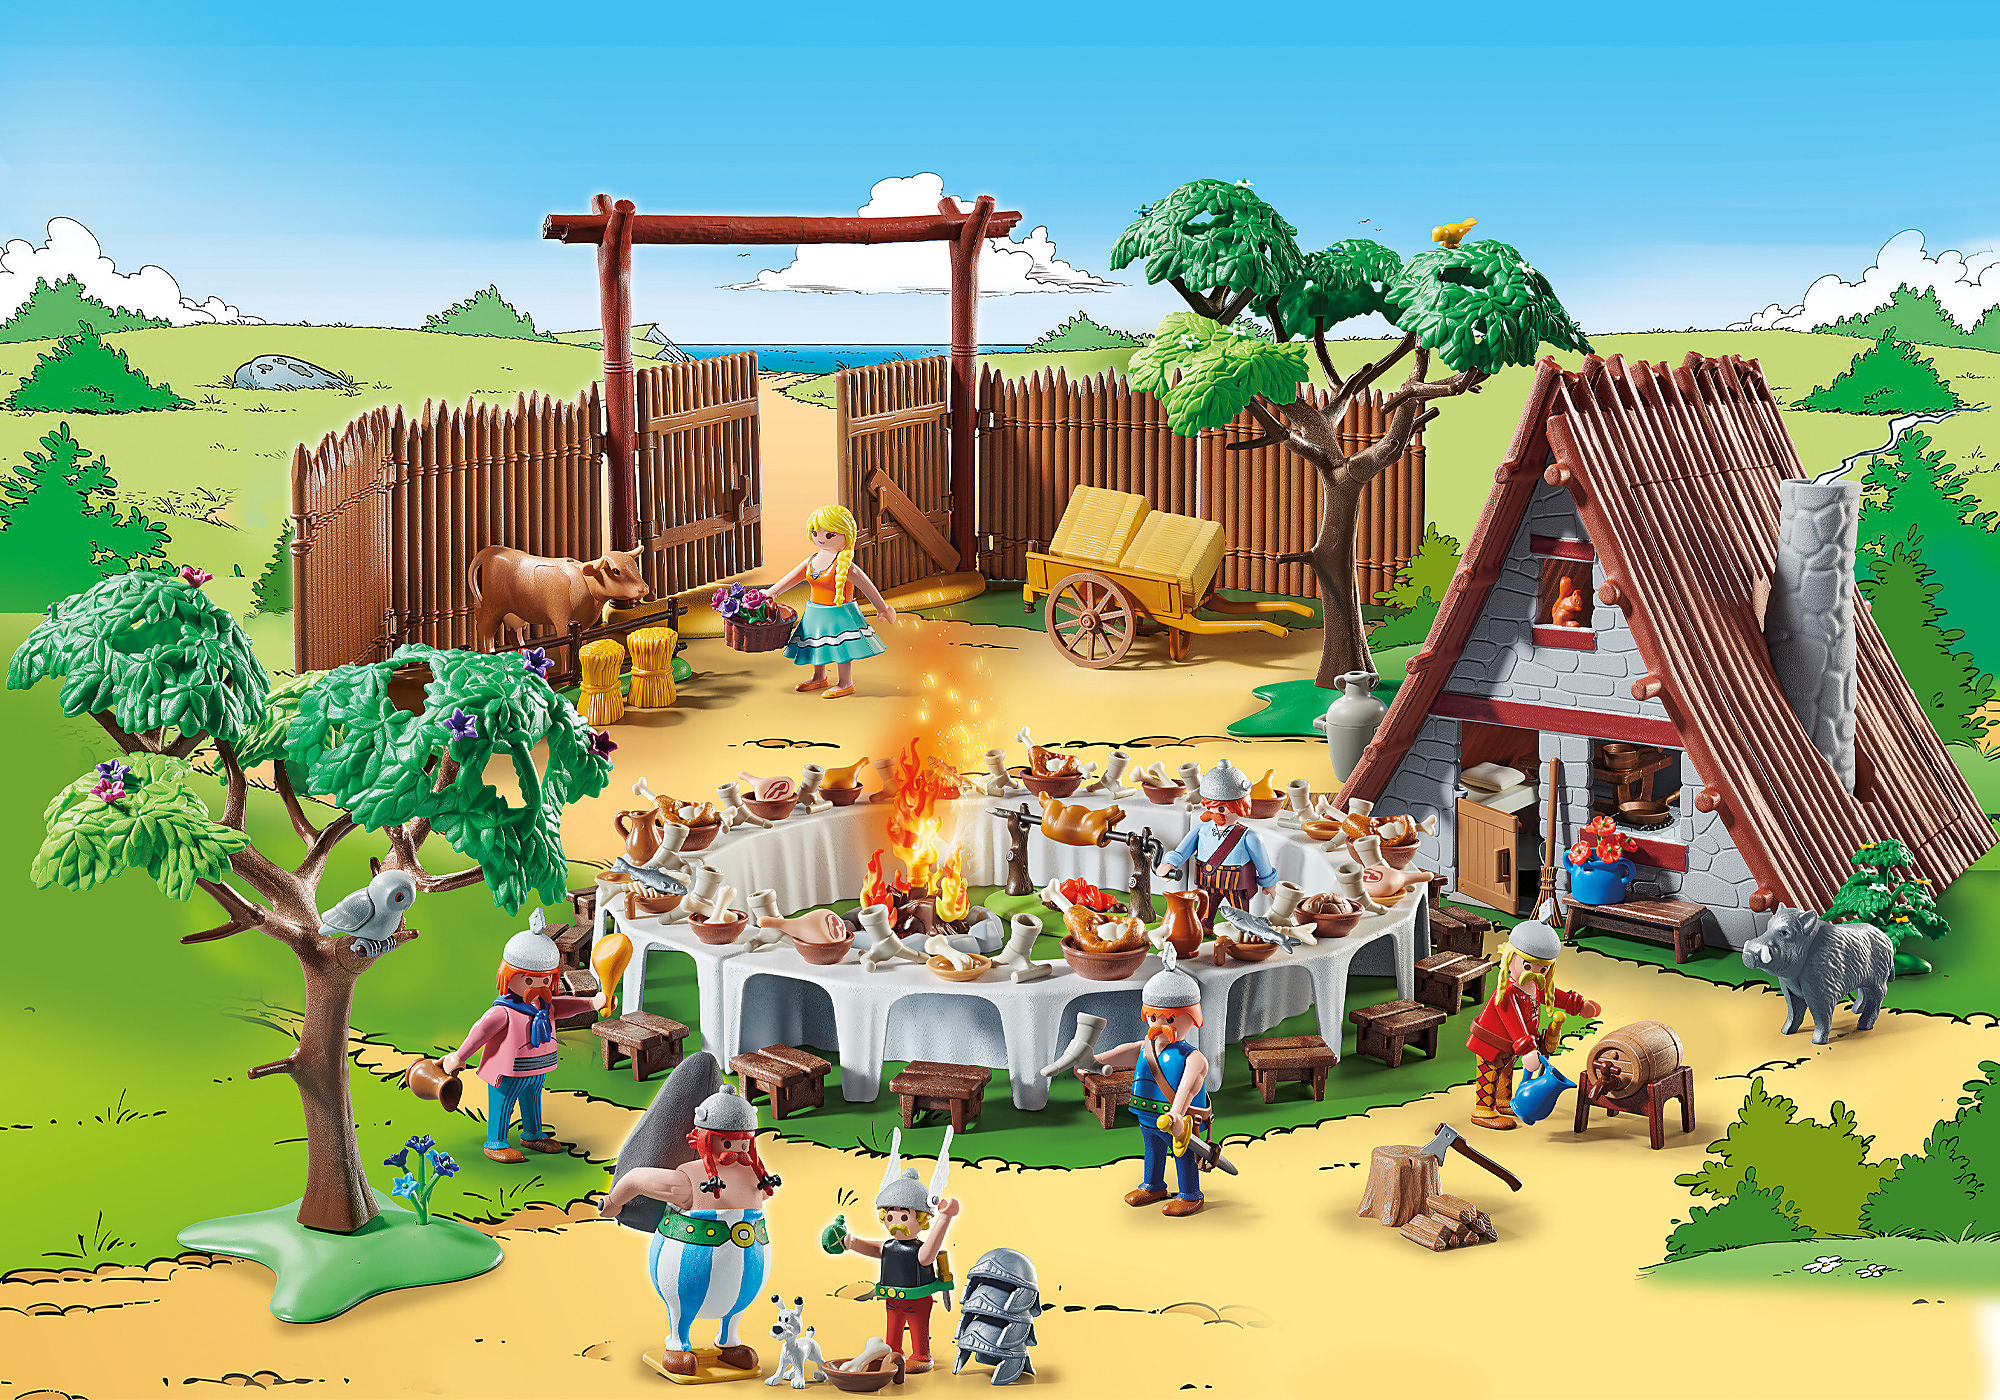 Playmobil Astérix: Banquet De La Village Multicolor